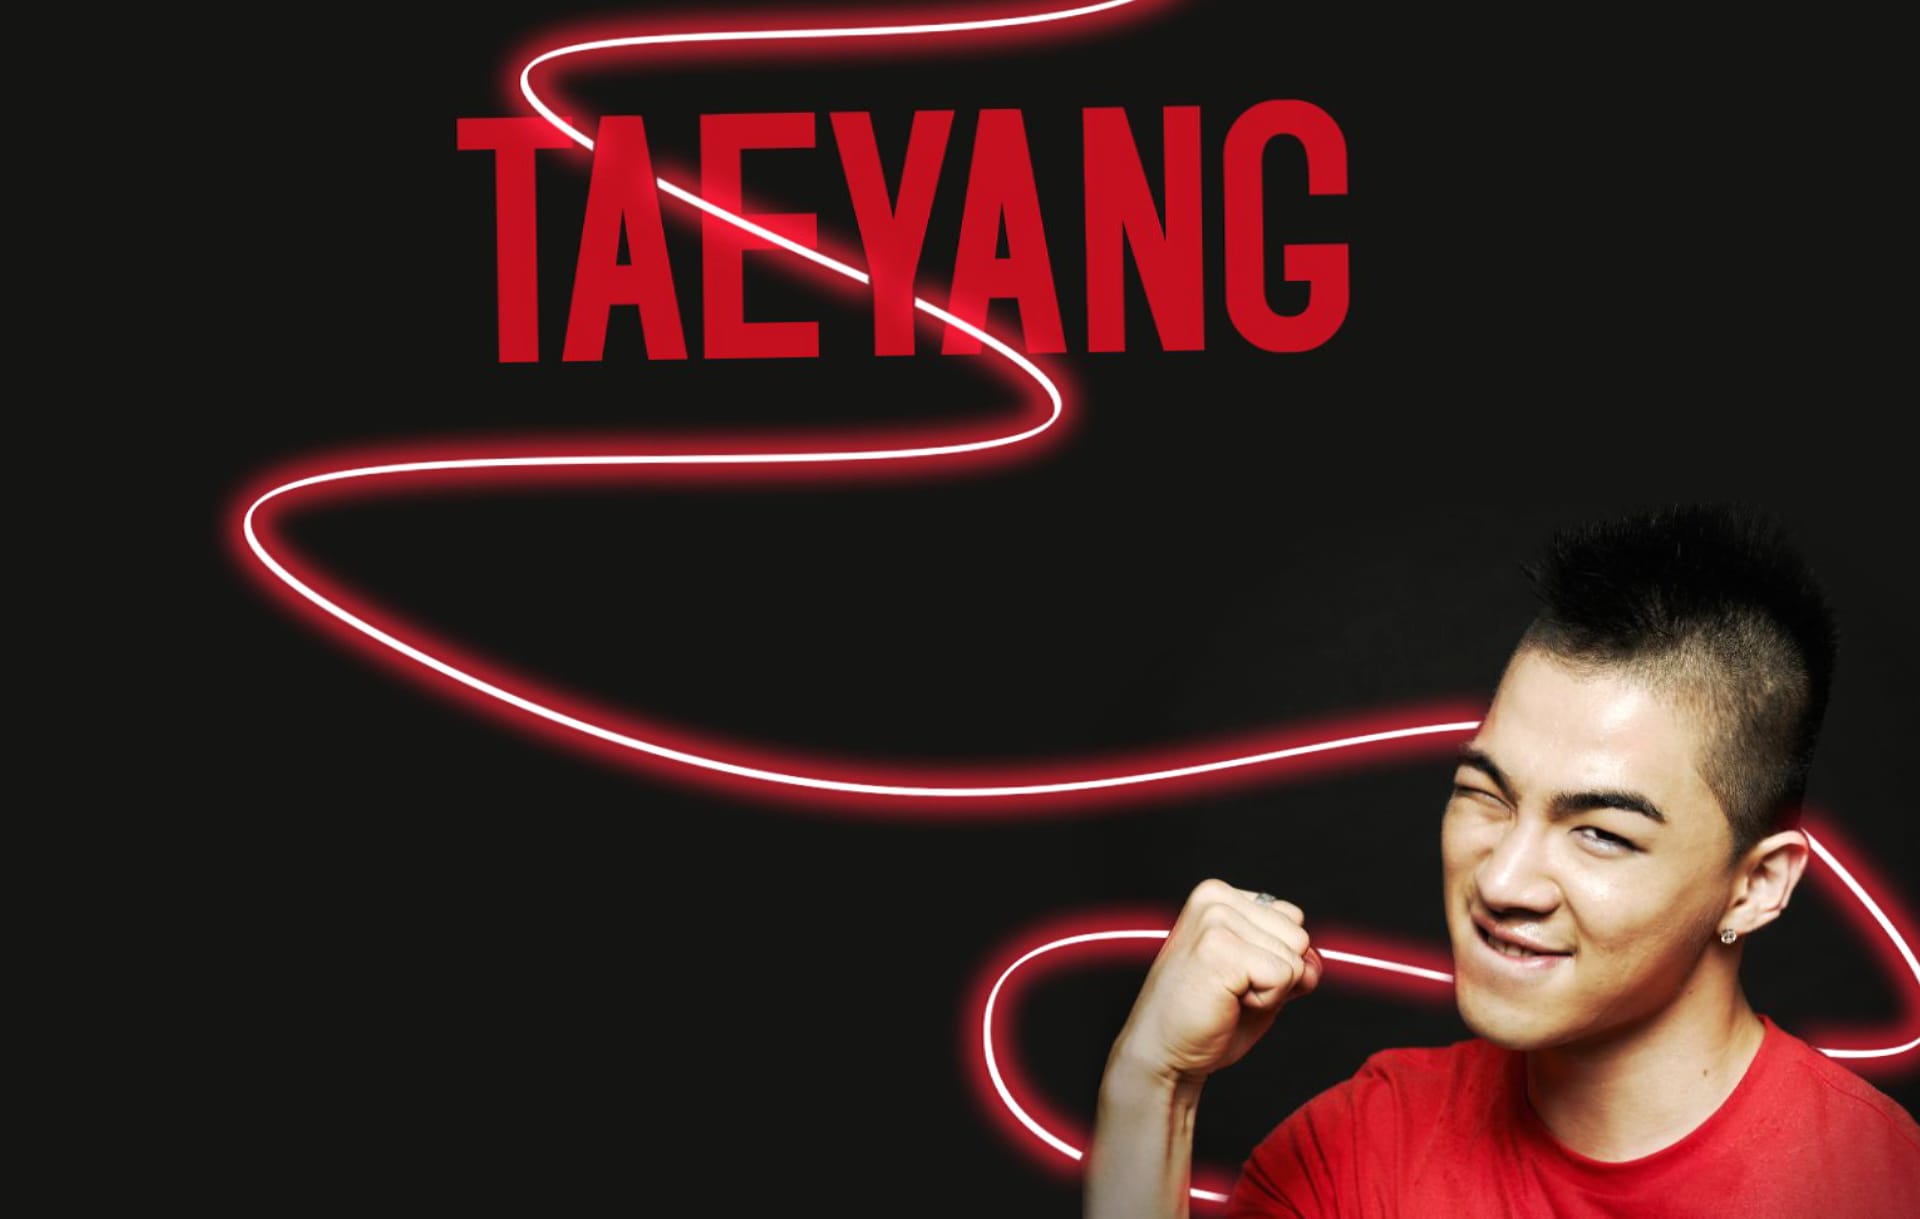 Taeyang at 1024 x 768 size wallpapers HD quality